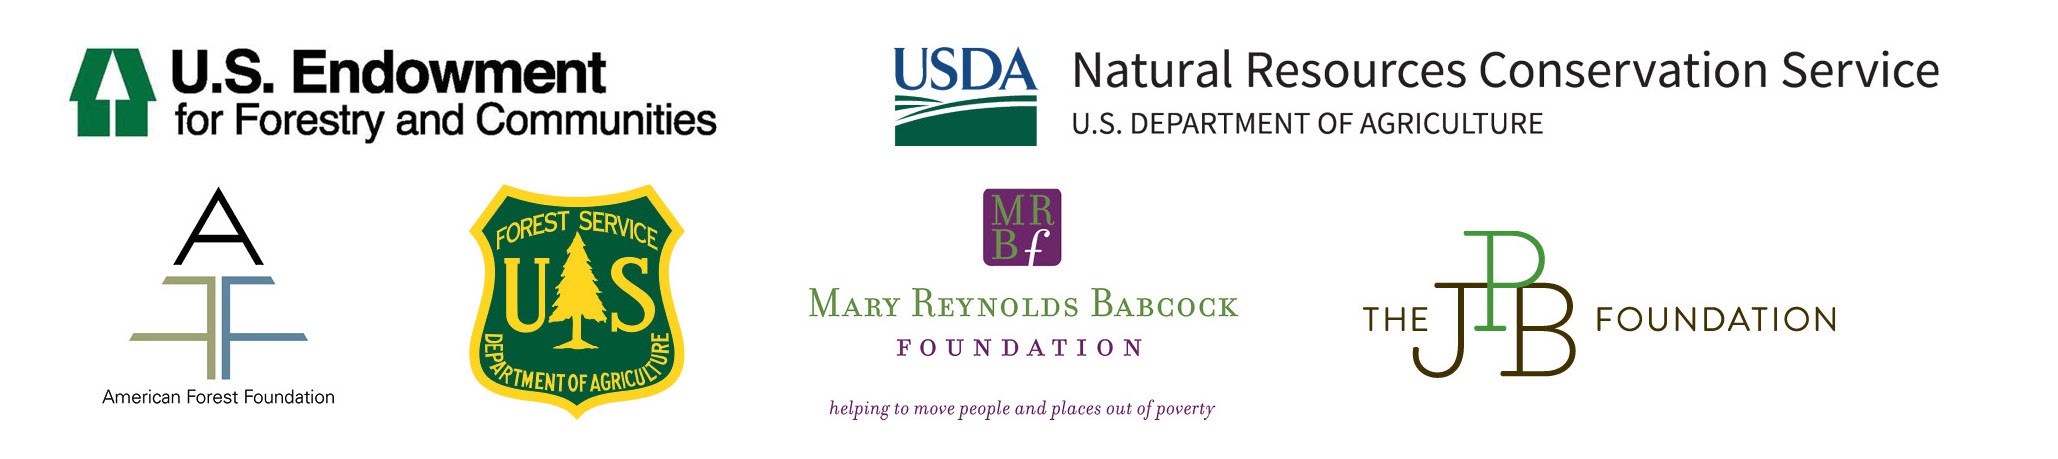 US Endowment, USDA, AFF, USFS, Mary Reynolds Babcock Foundation, JPB Foundation